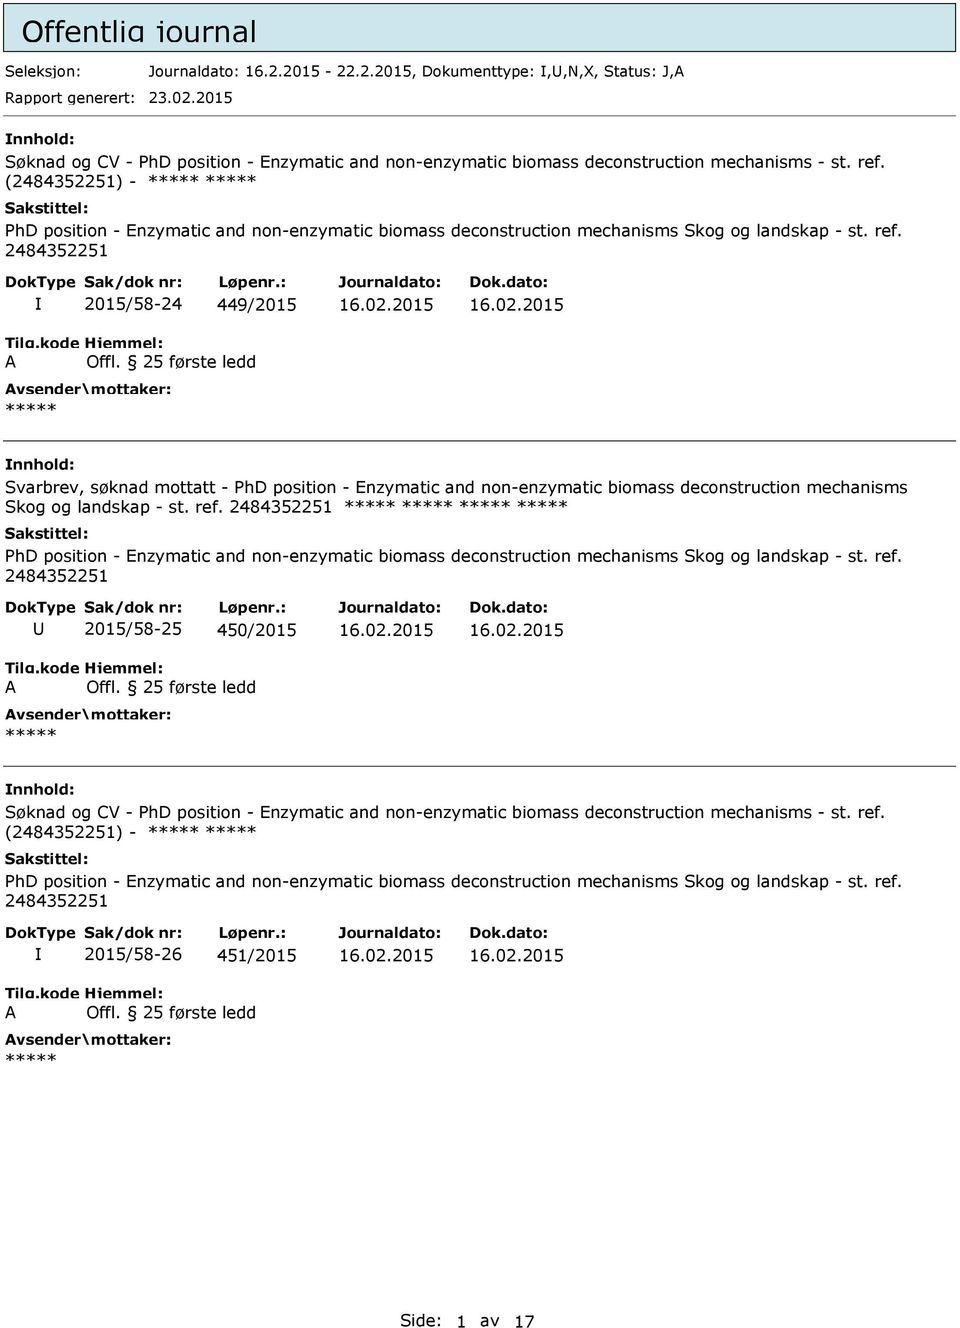 (2484352251) - PhD position - Enzymatic and non-enzymatic biomass deconstruction mechanisms Skog og landskap - st. ref.